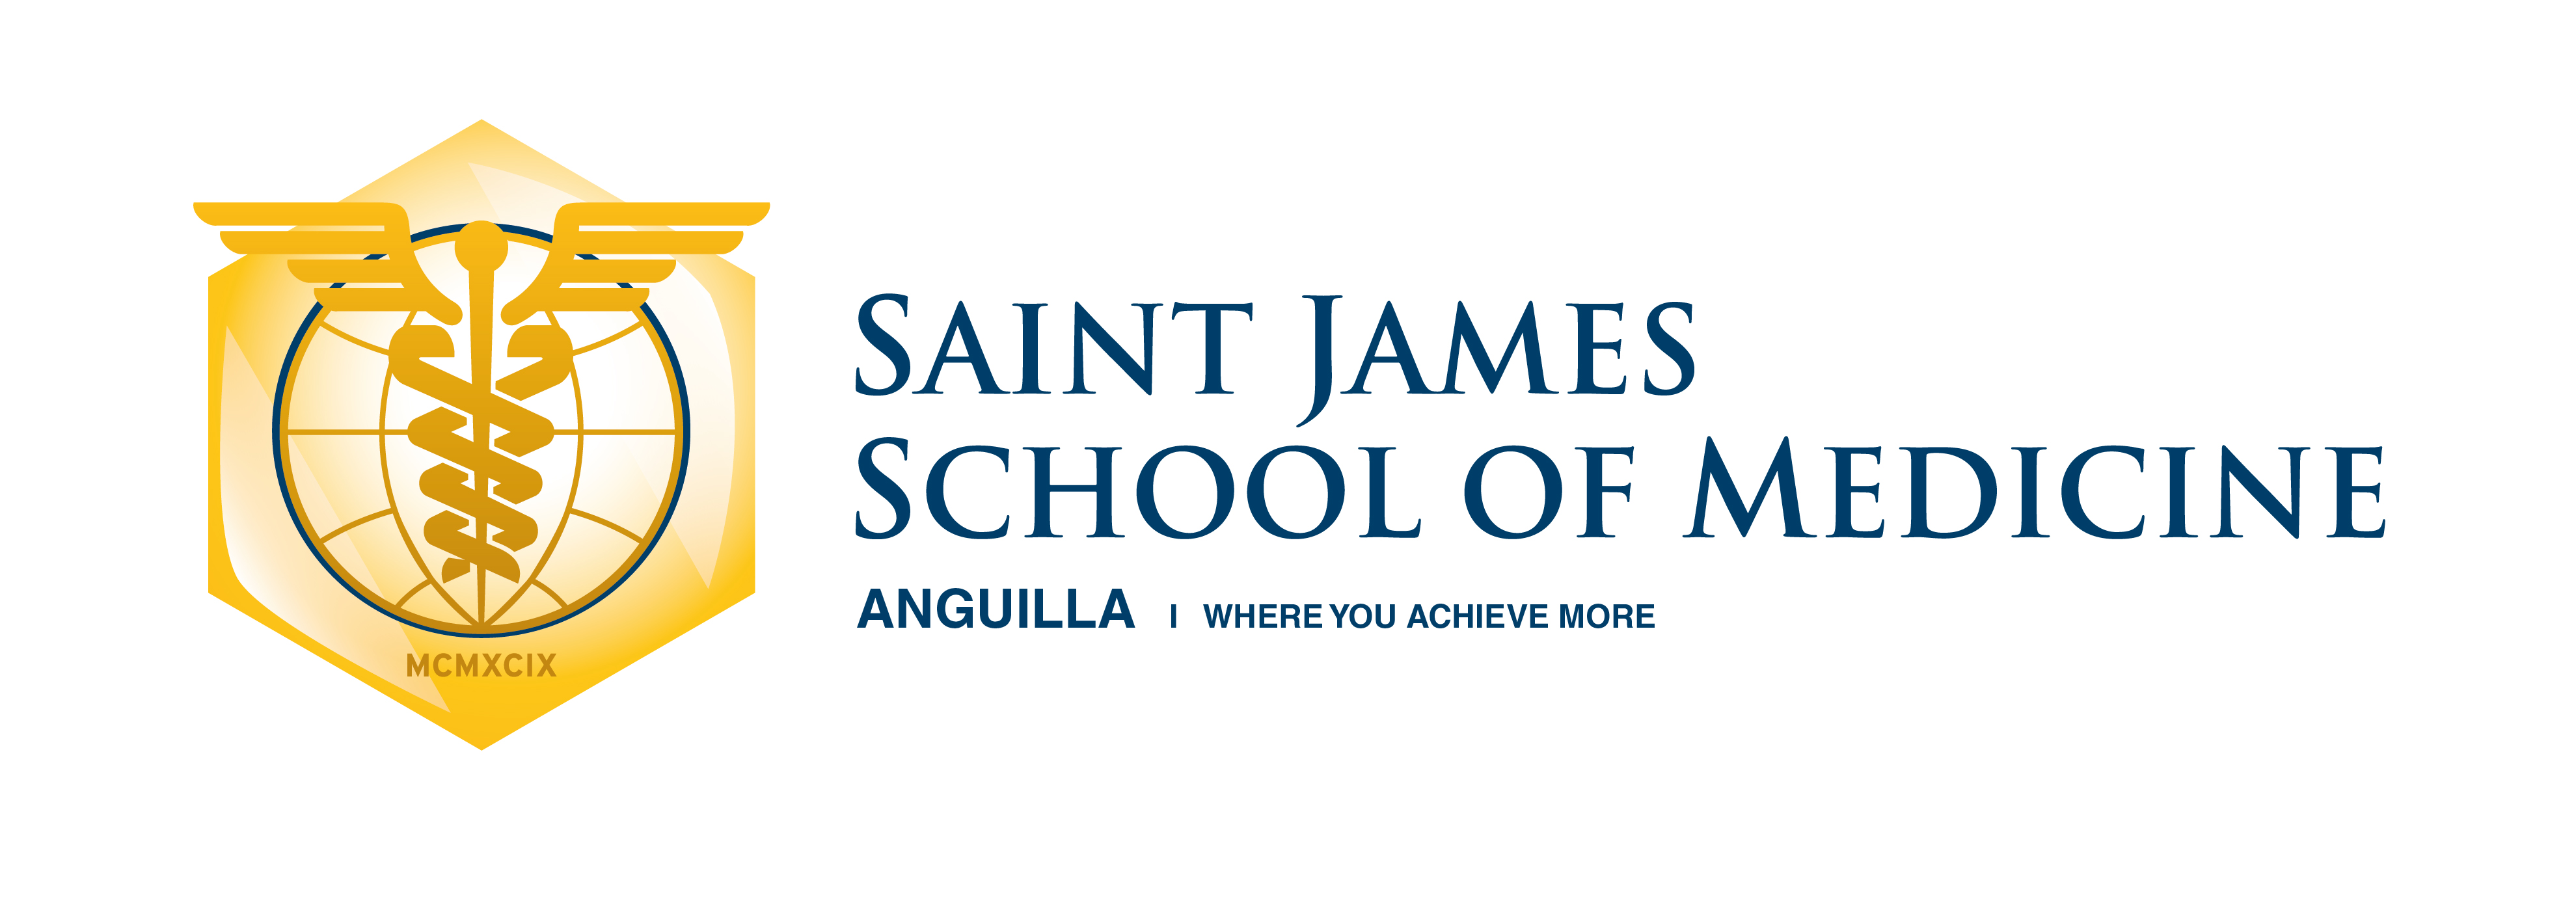 Saint James School of Medicine Introduces New Logo, Website and ...